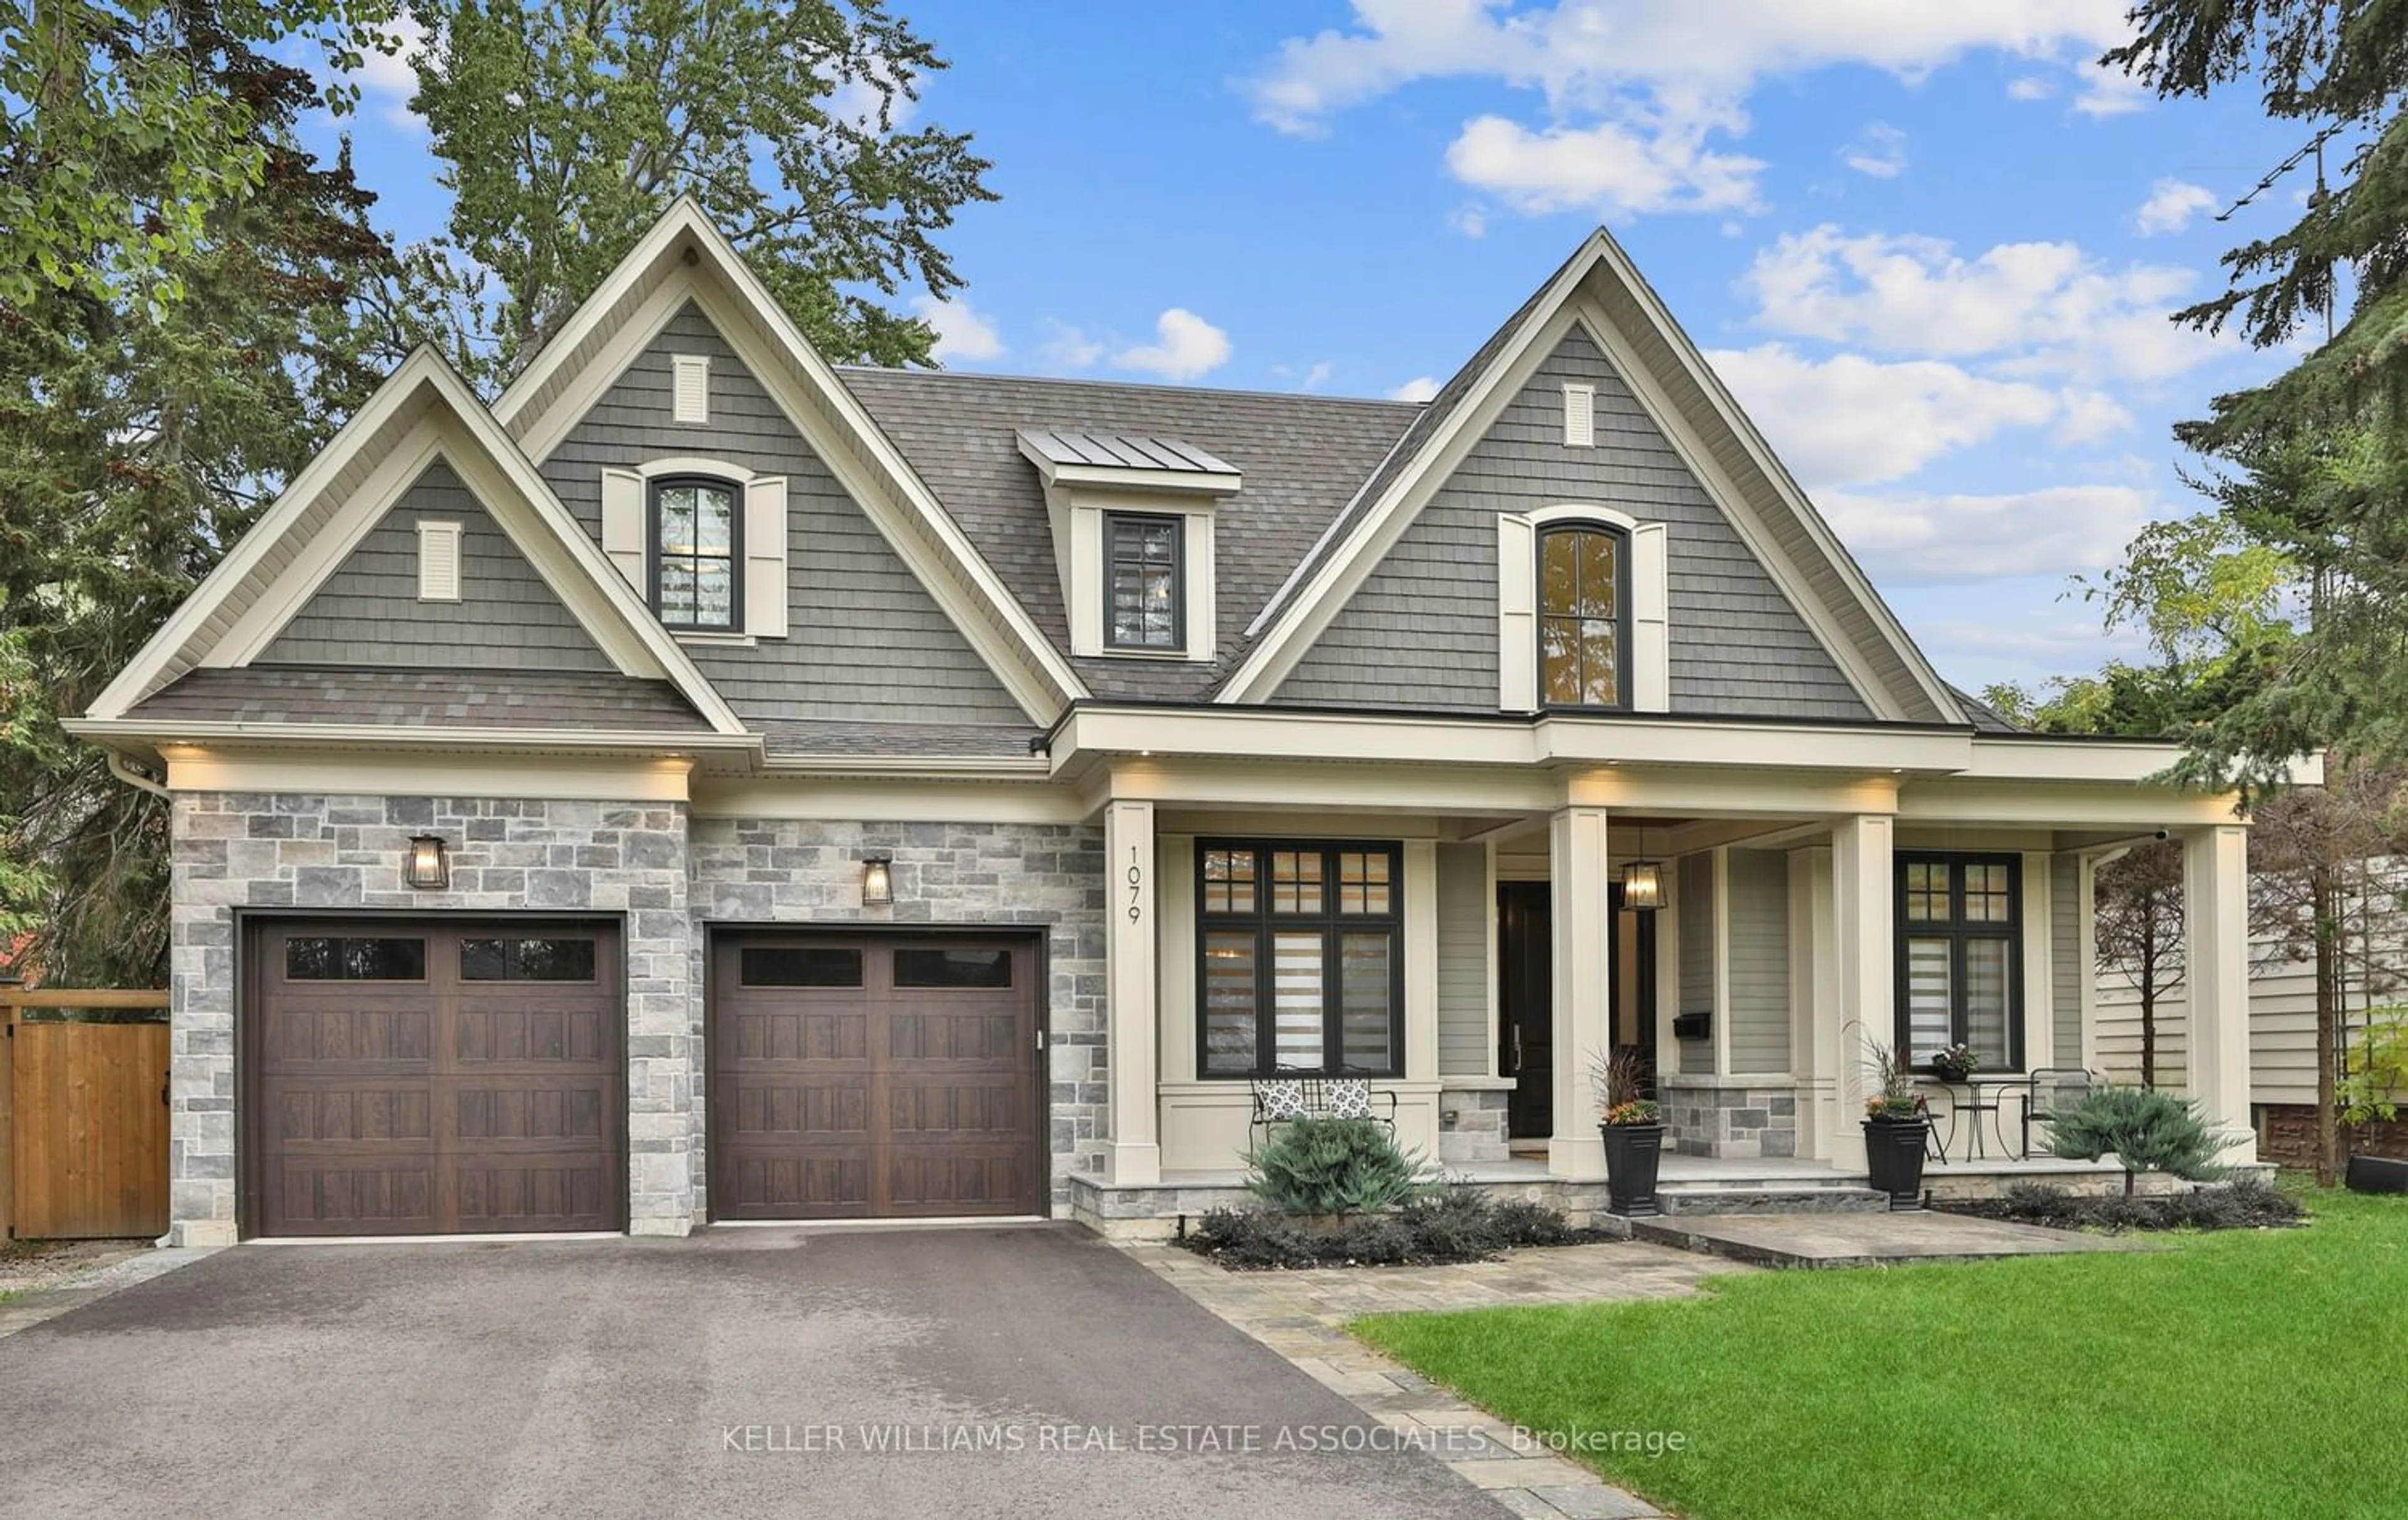 Home with brick exterior material for 1079 Pelham Ave, Mississauga Ontario L5E 1L3